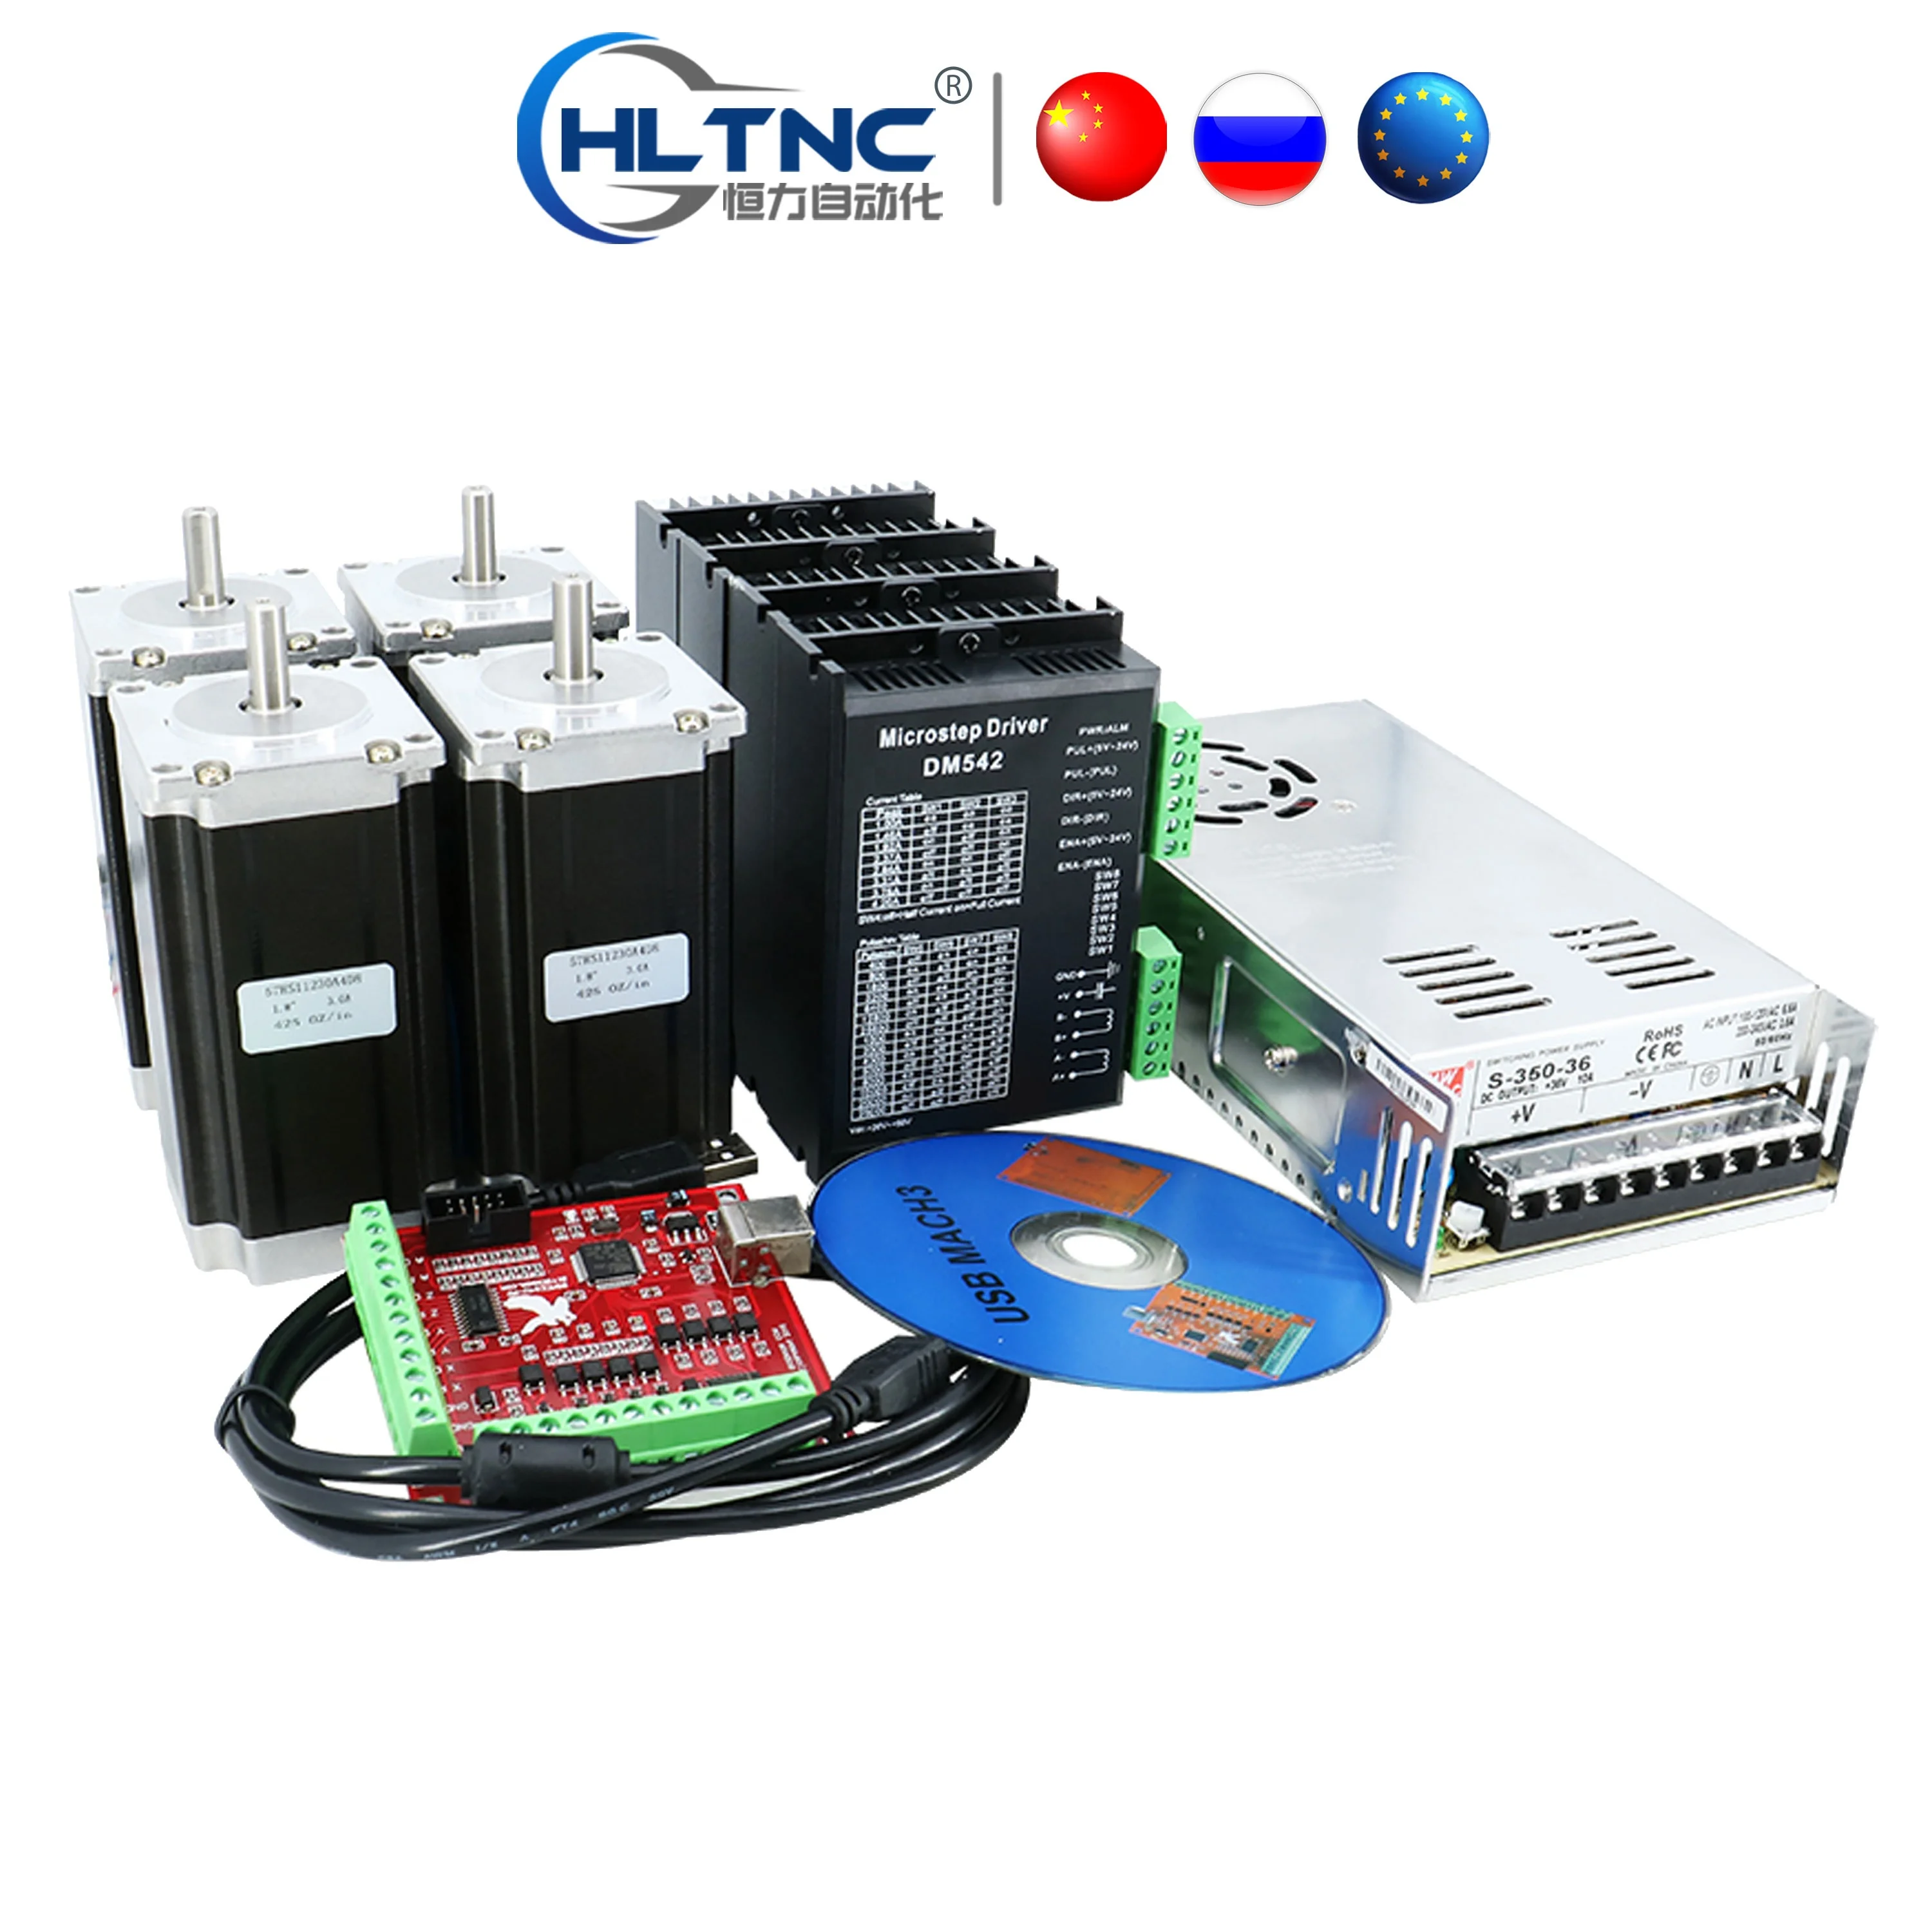 

CN Ru EU CNC Router 4 Axis kit 4pcs TB6600/DM542 Stepper motor driver+ NEMA 23 425 Oz +350W power supply